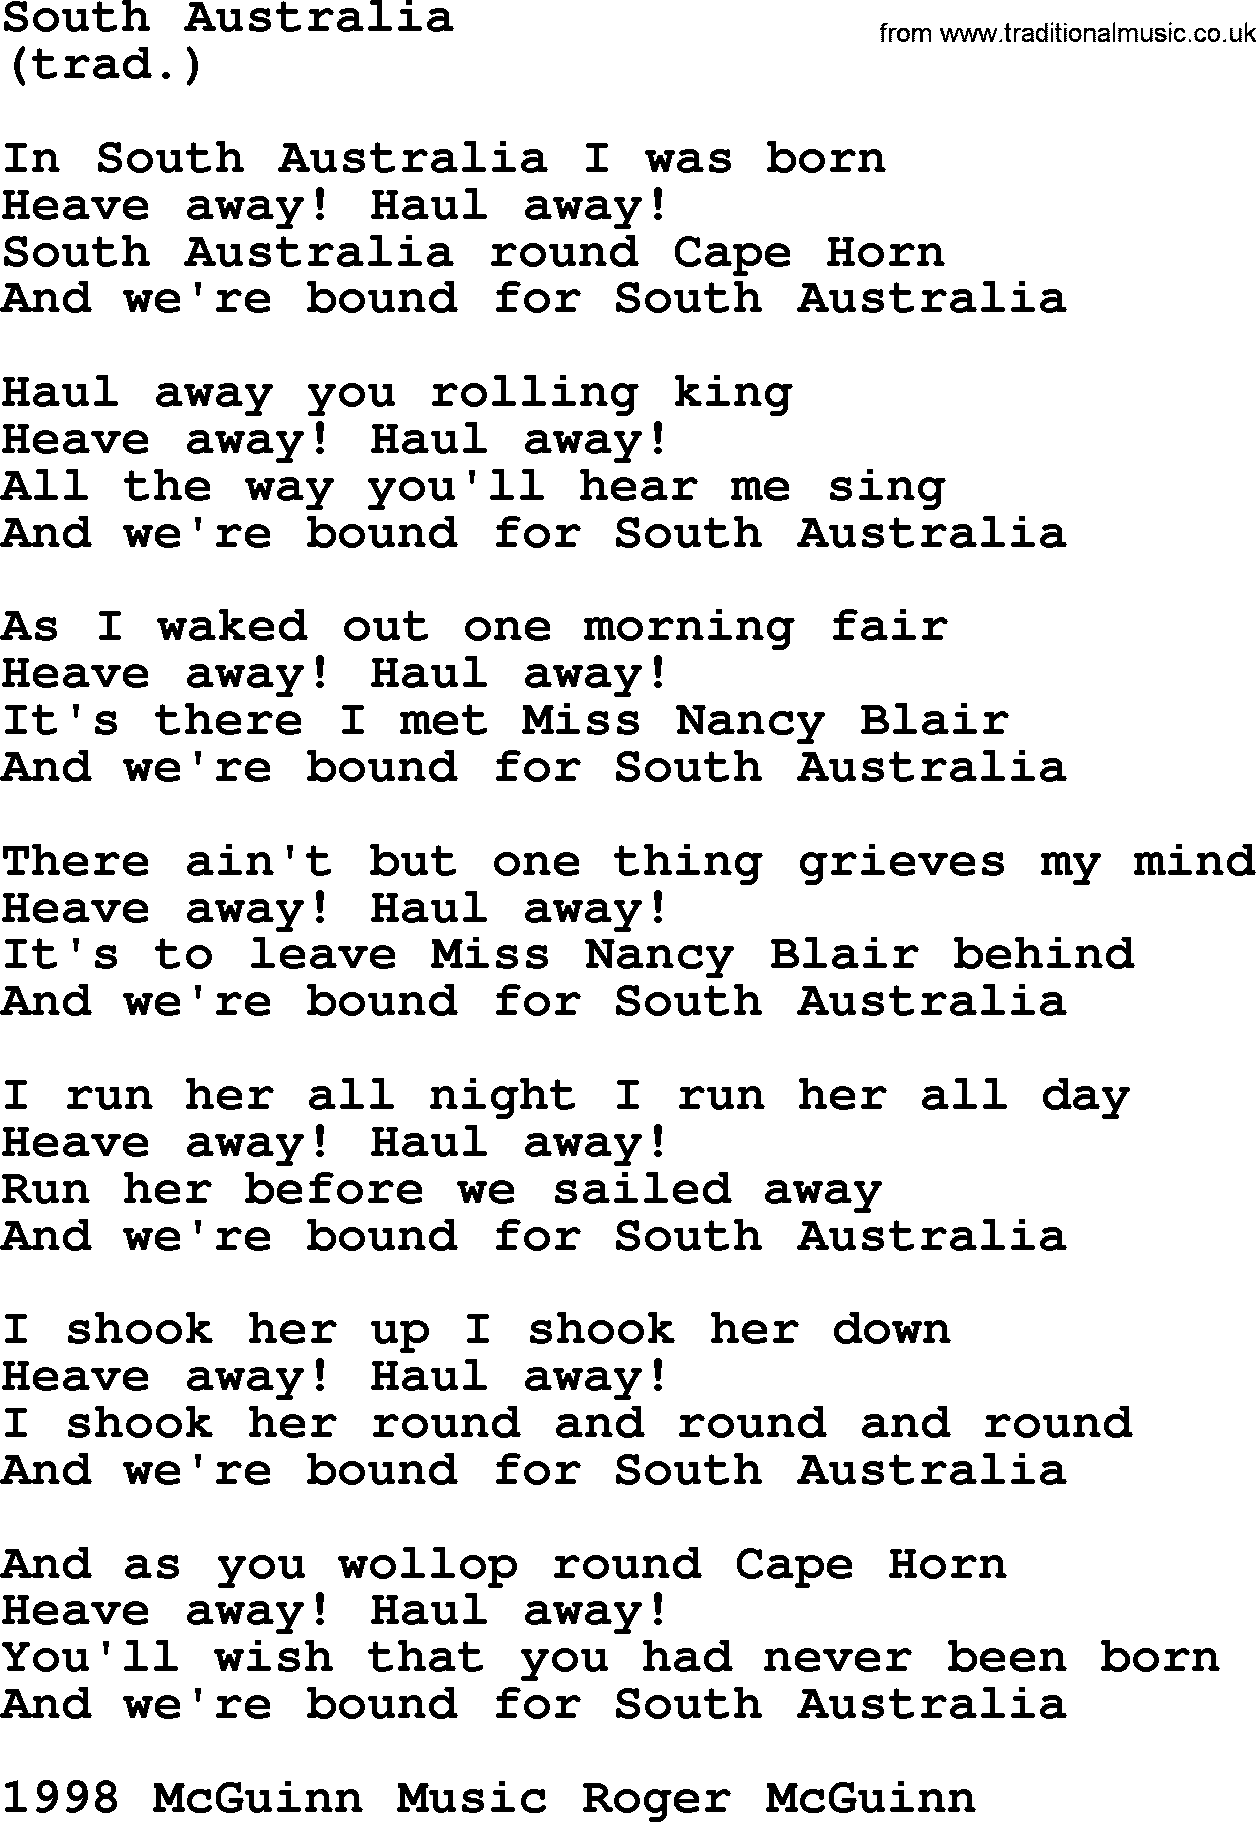 The Byrds song South Australia, lyrics